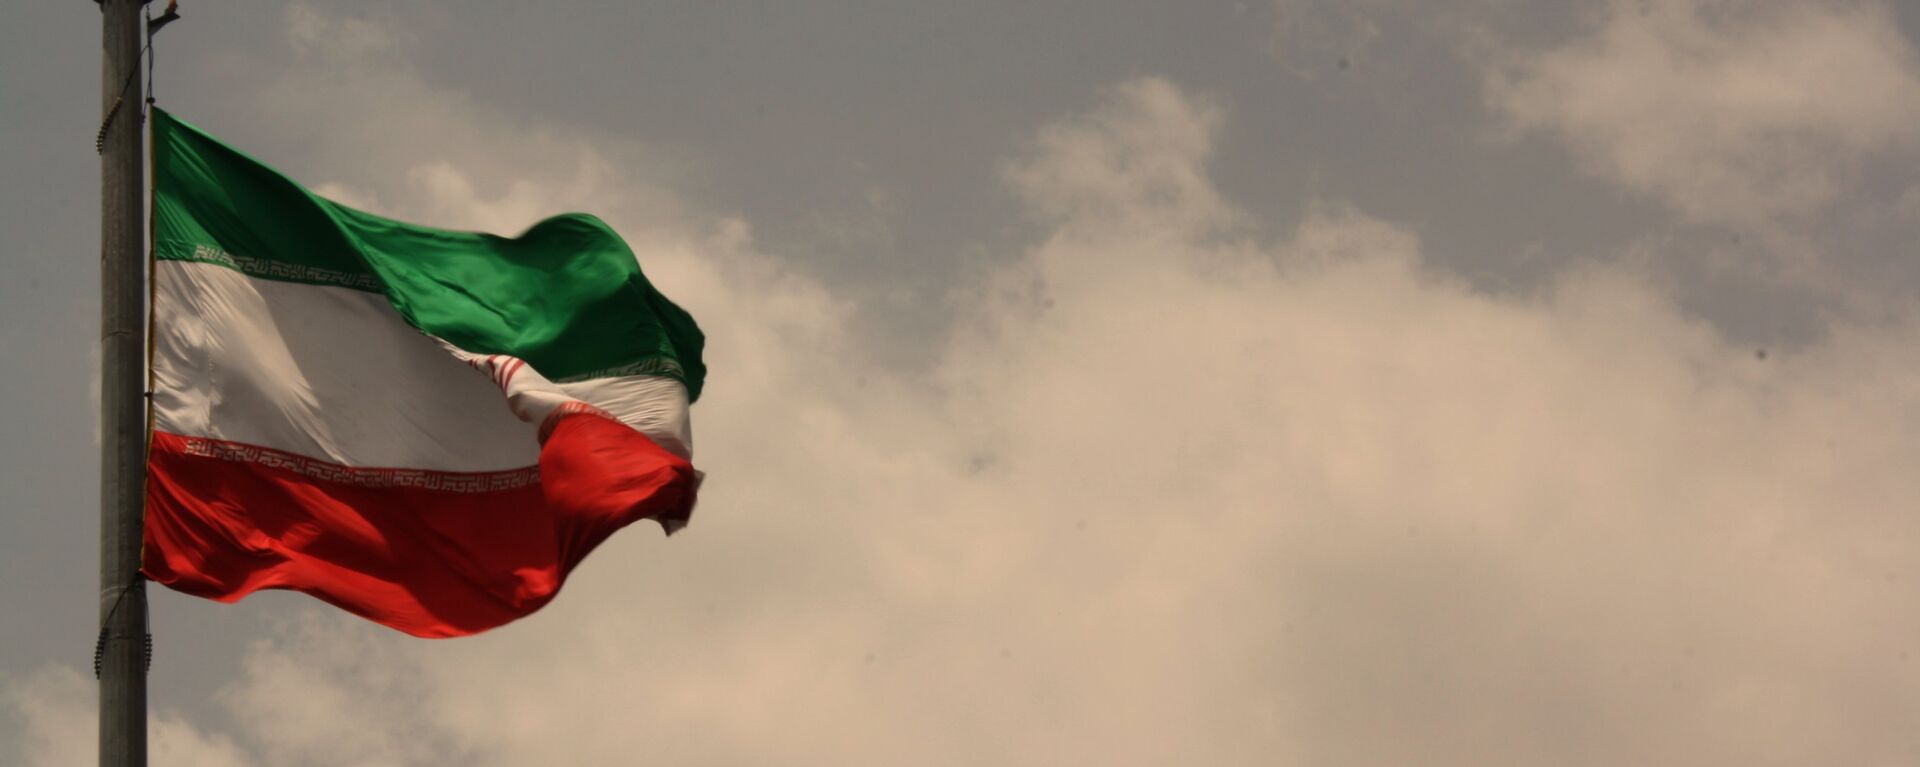 La bandera de Irán - Sputnik Mundo, 1920, 03.11.2021